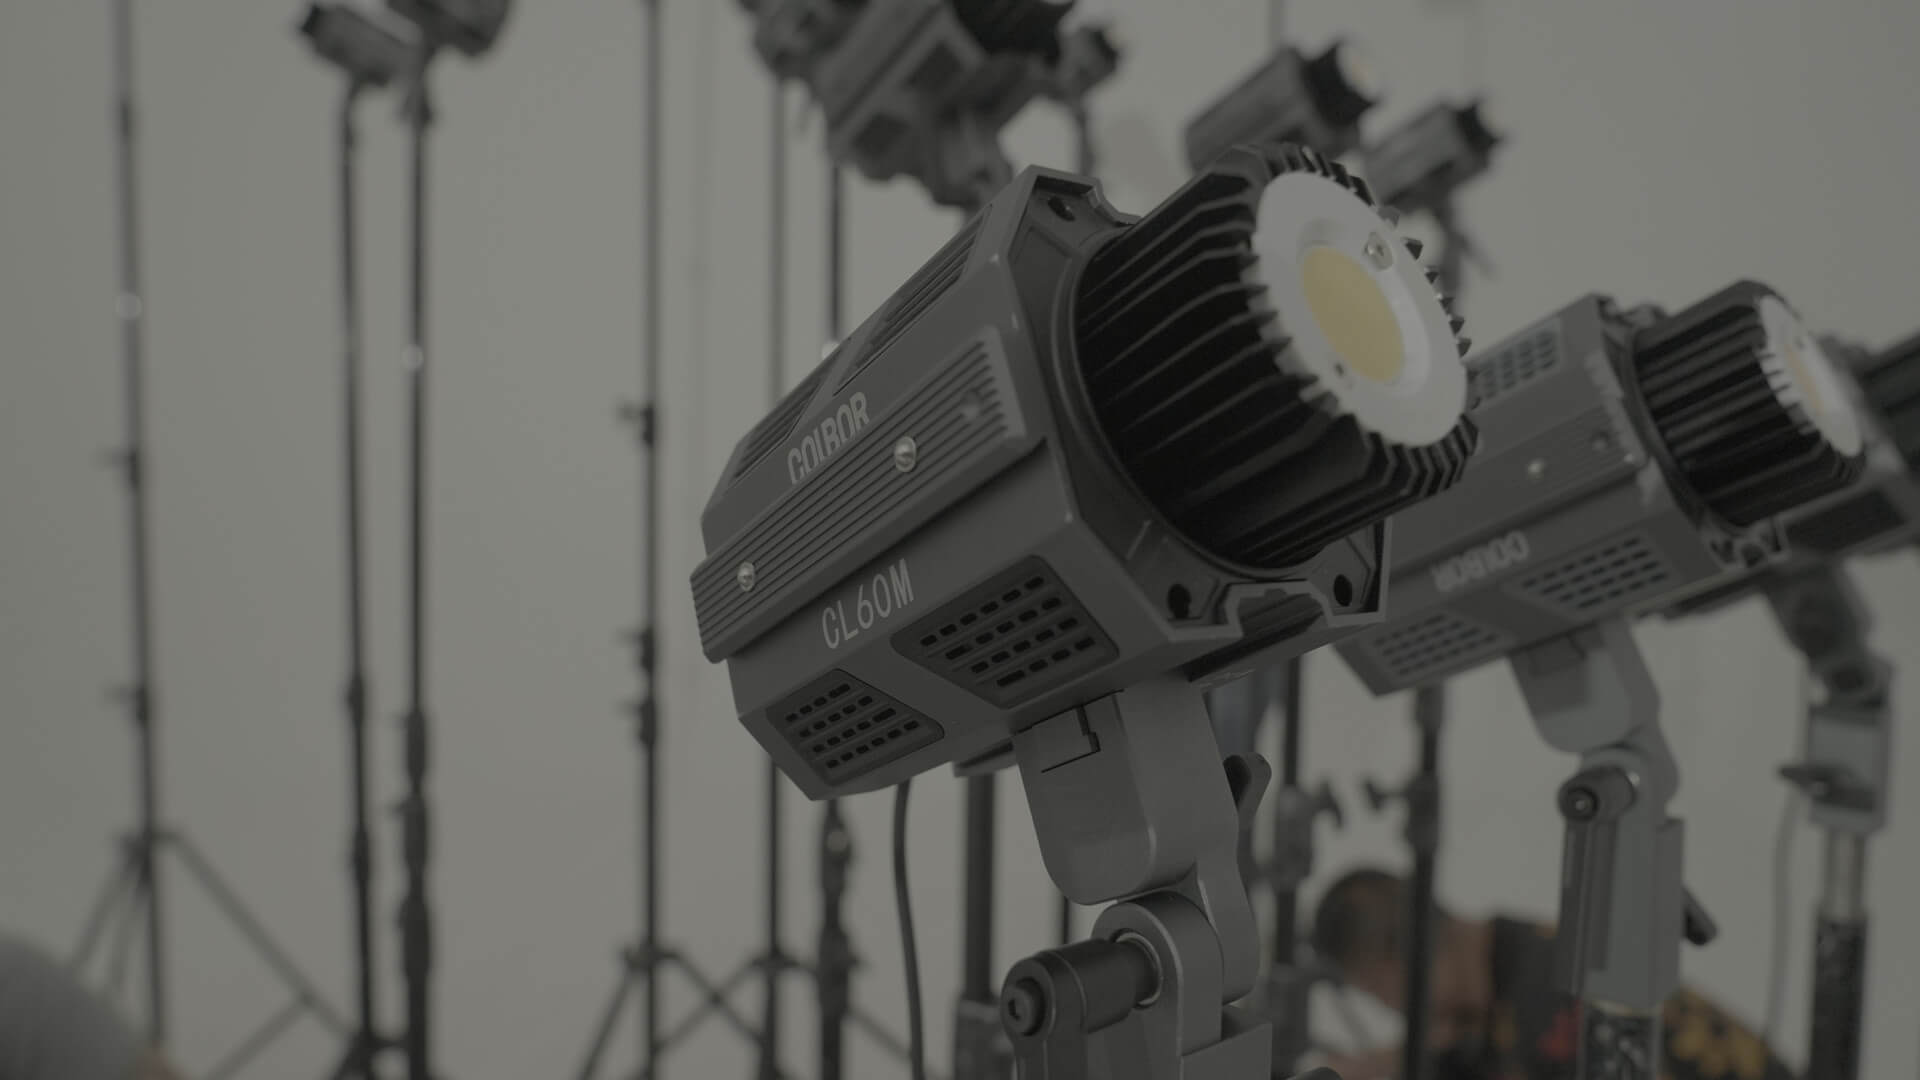 LED lighting for studio: Four best picks for videographers and photographers